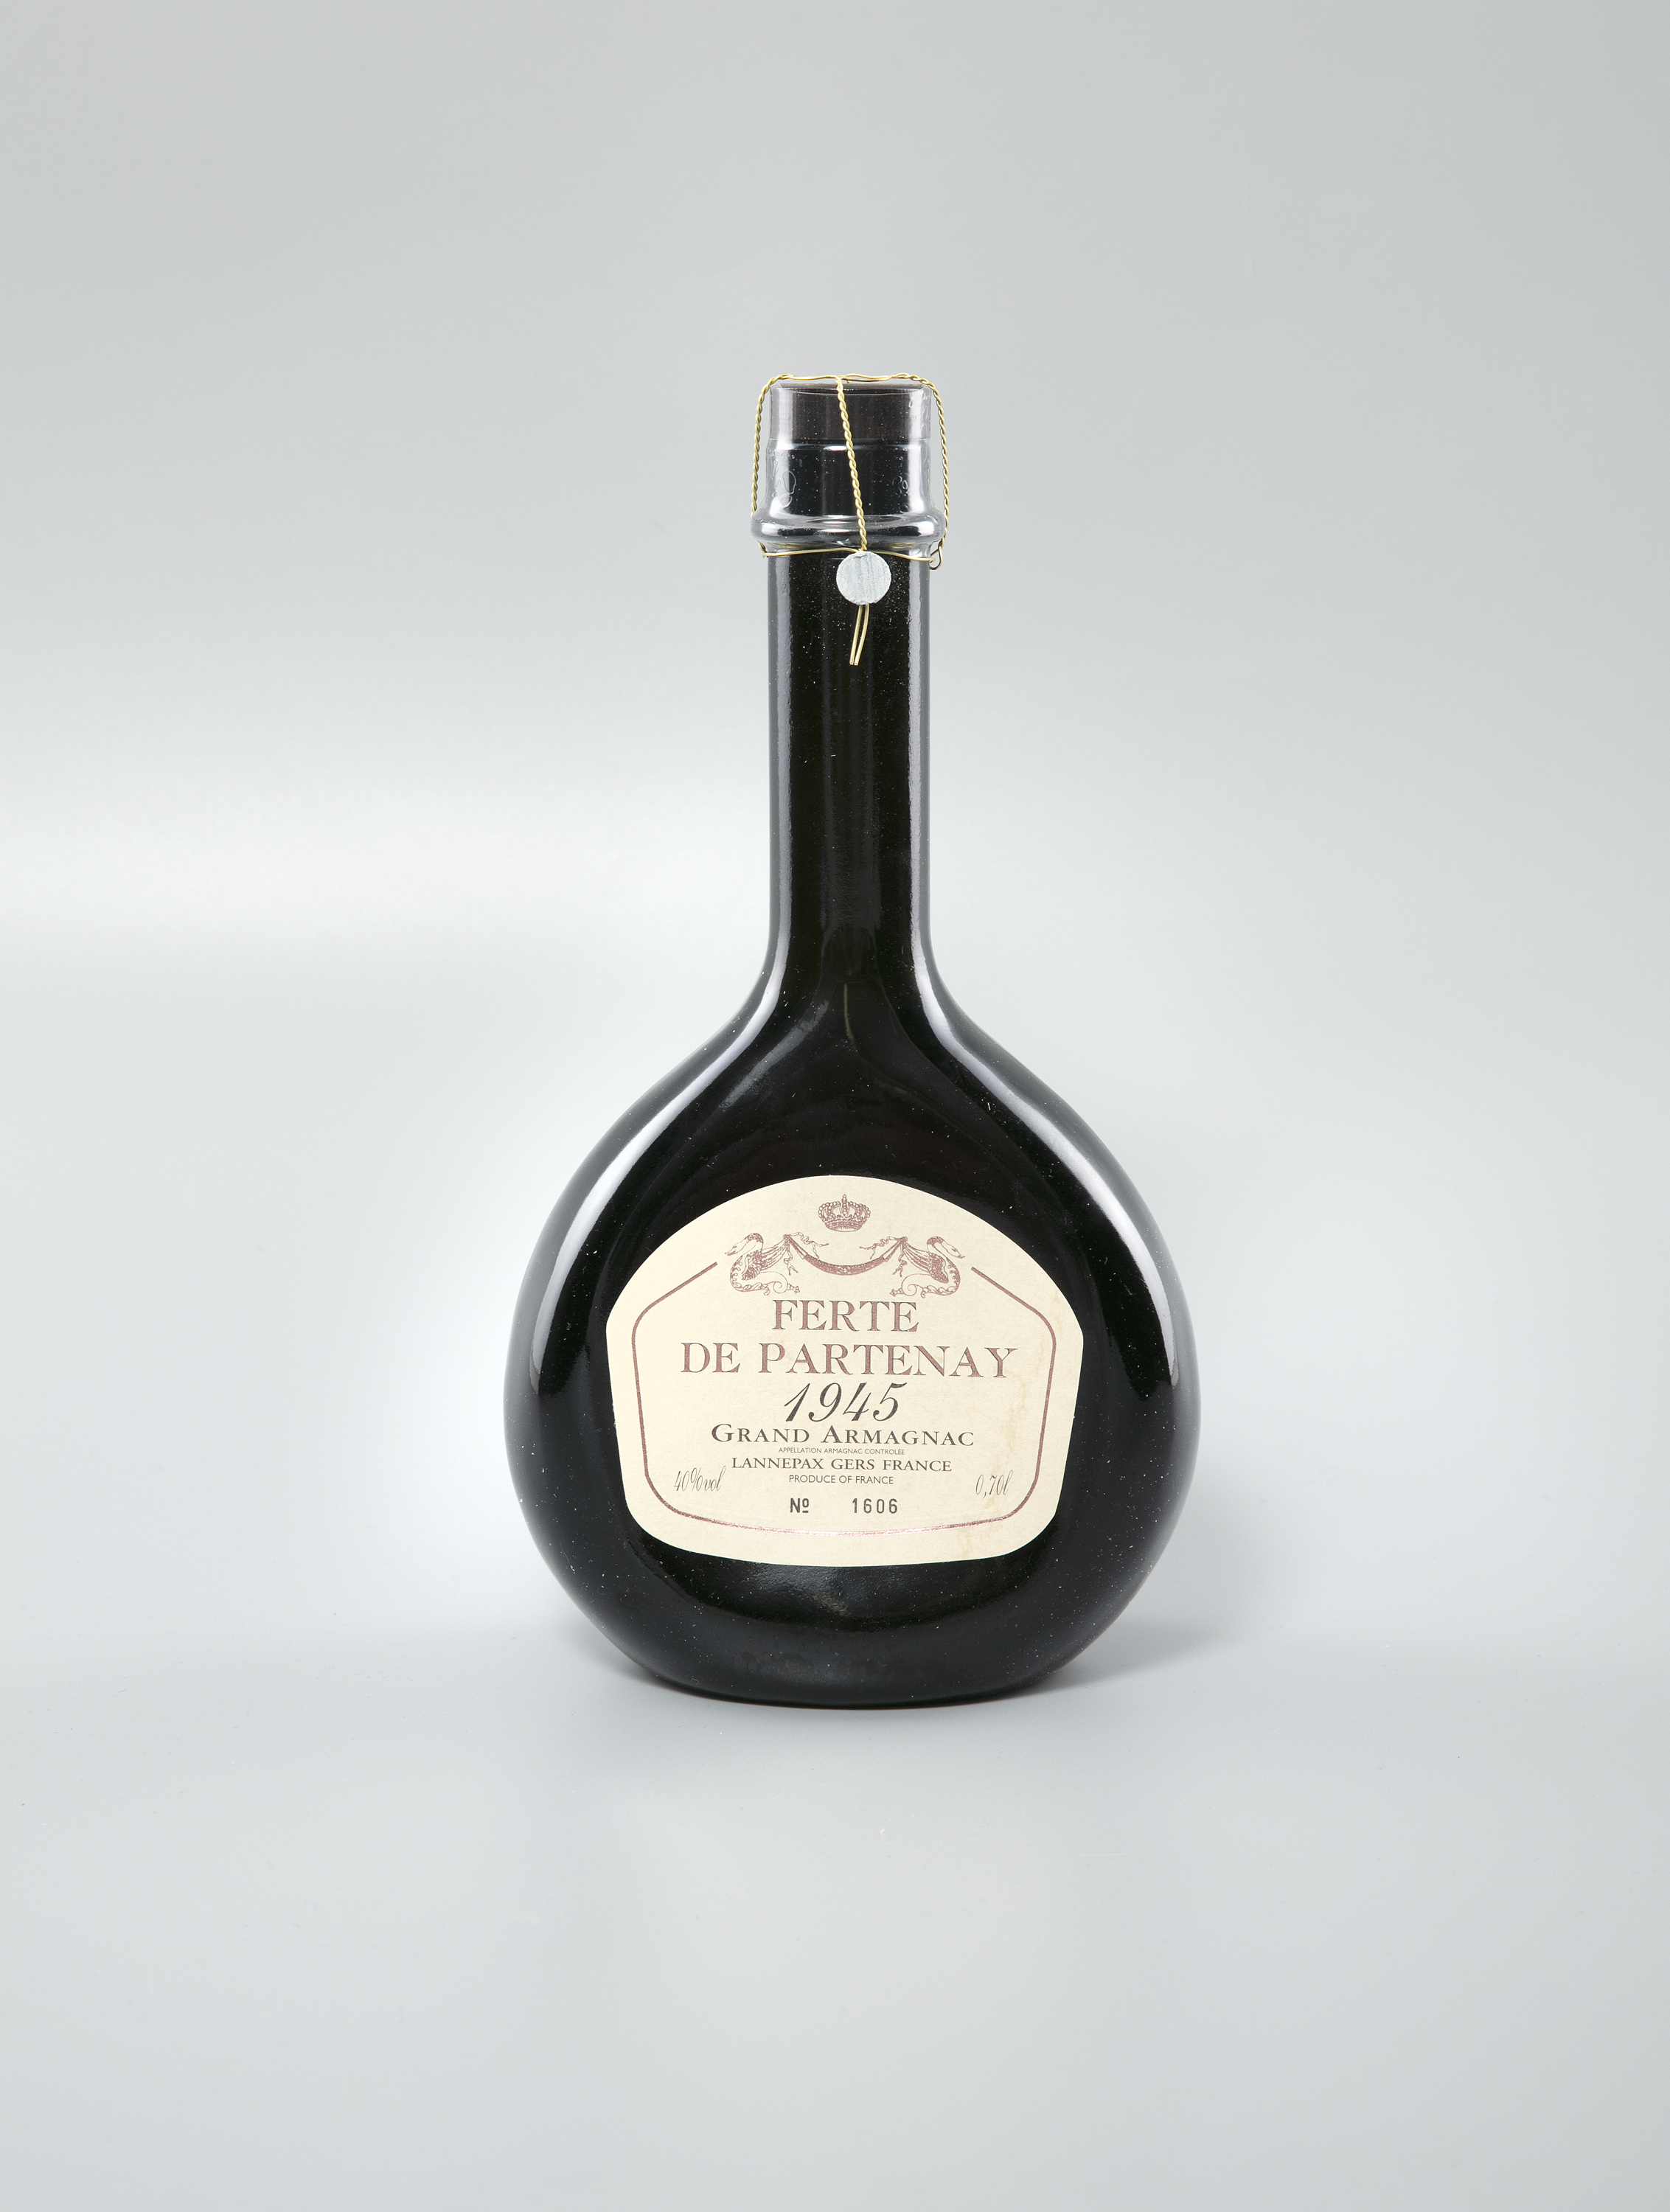 FERTE DE PARTENAY 1945 1 bottle, in original presentation case - Image 4 of 8